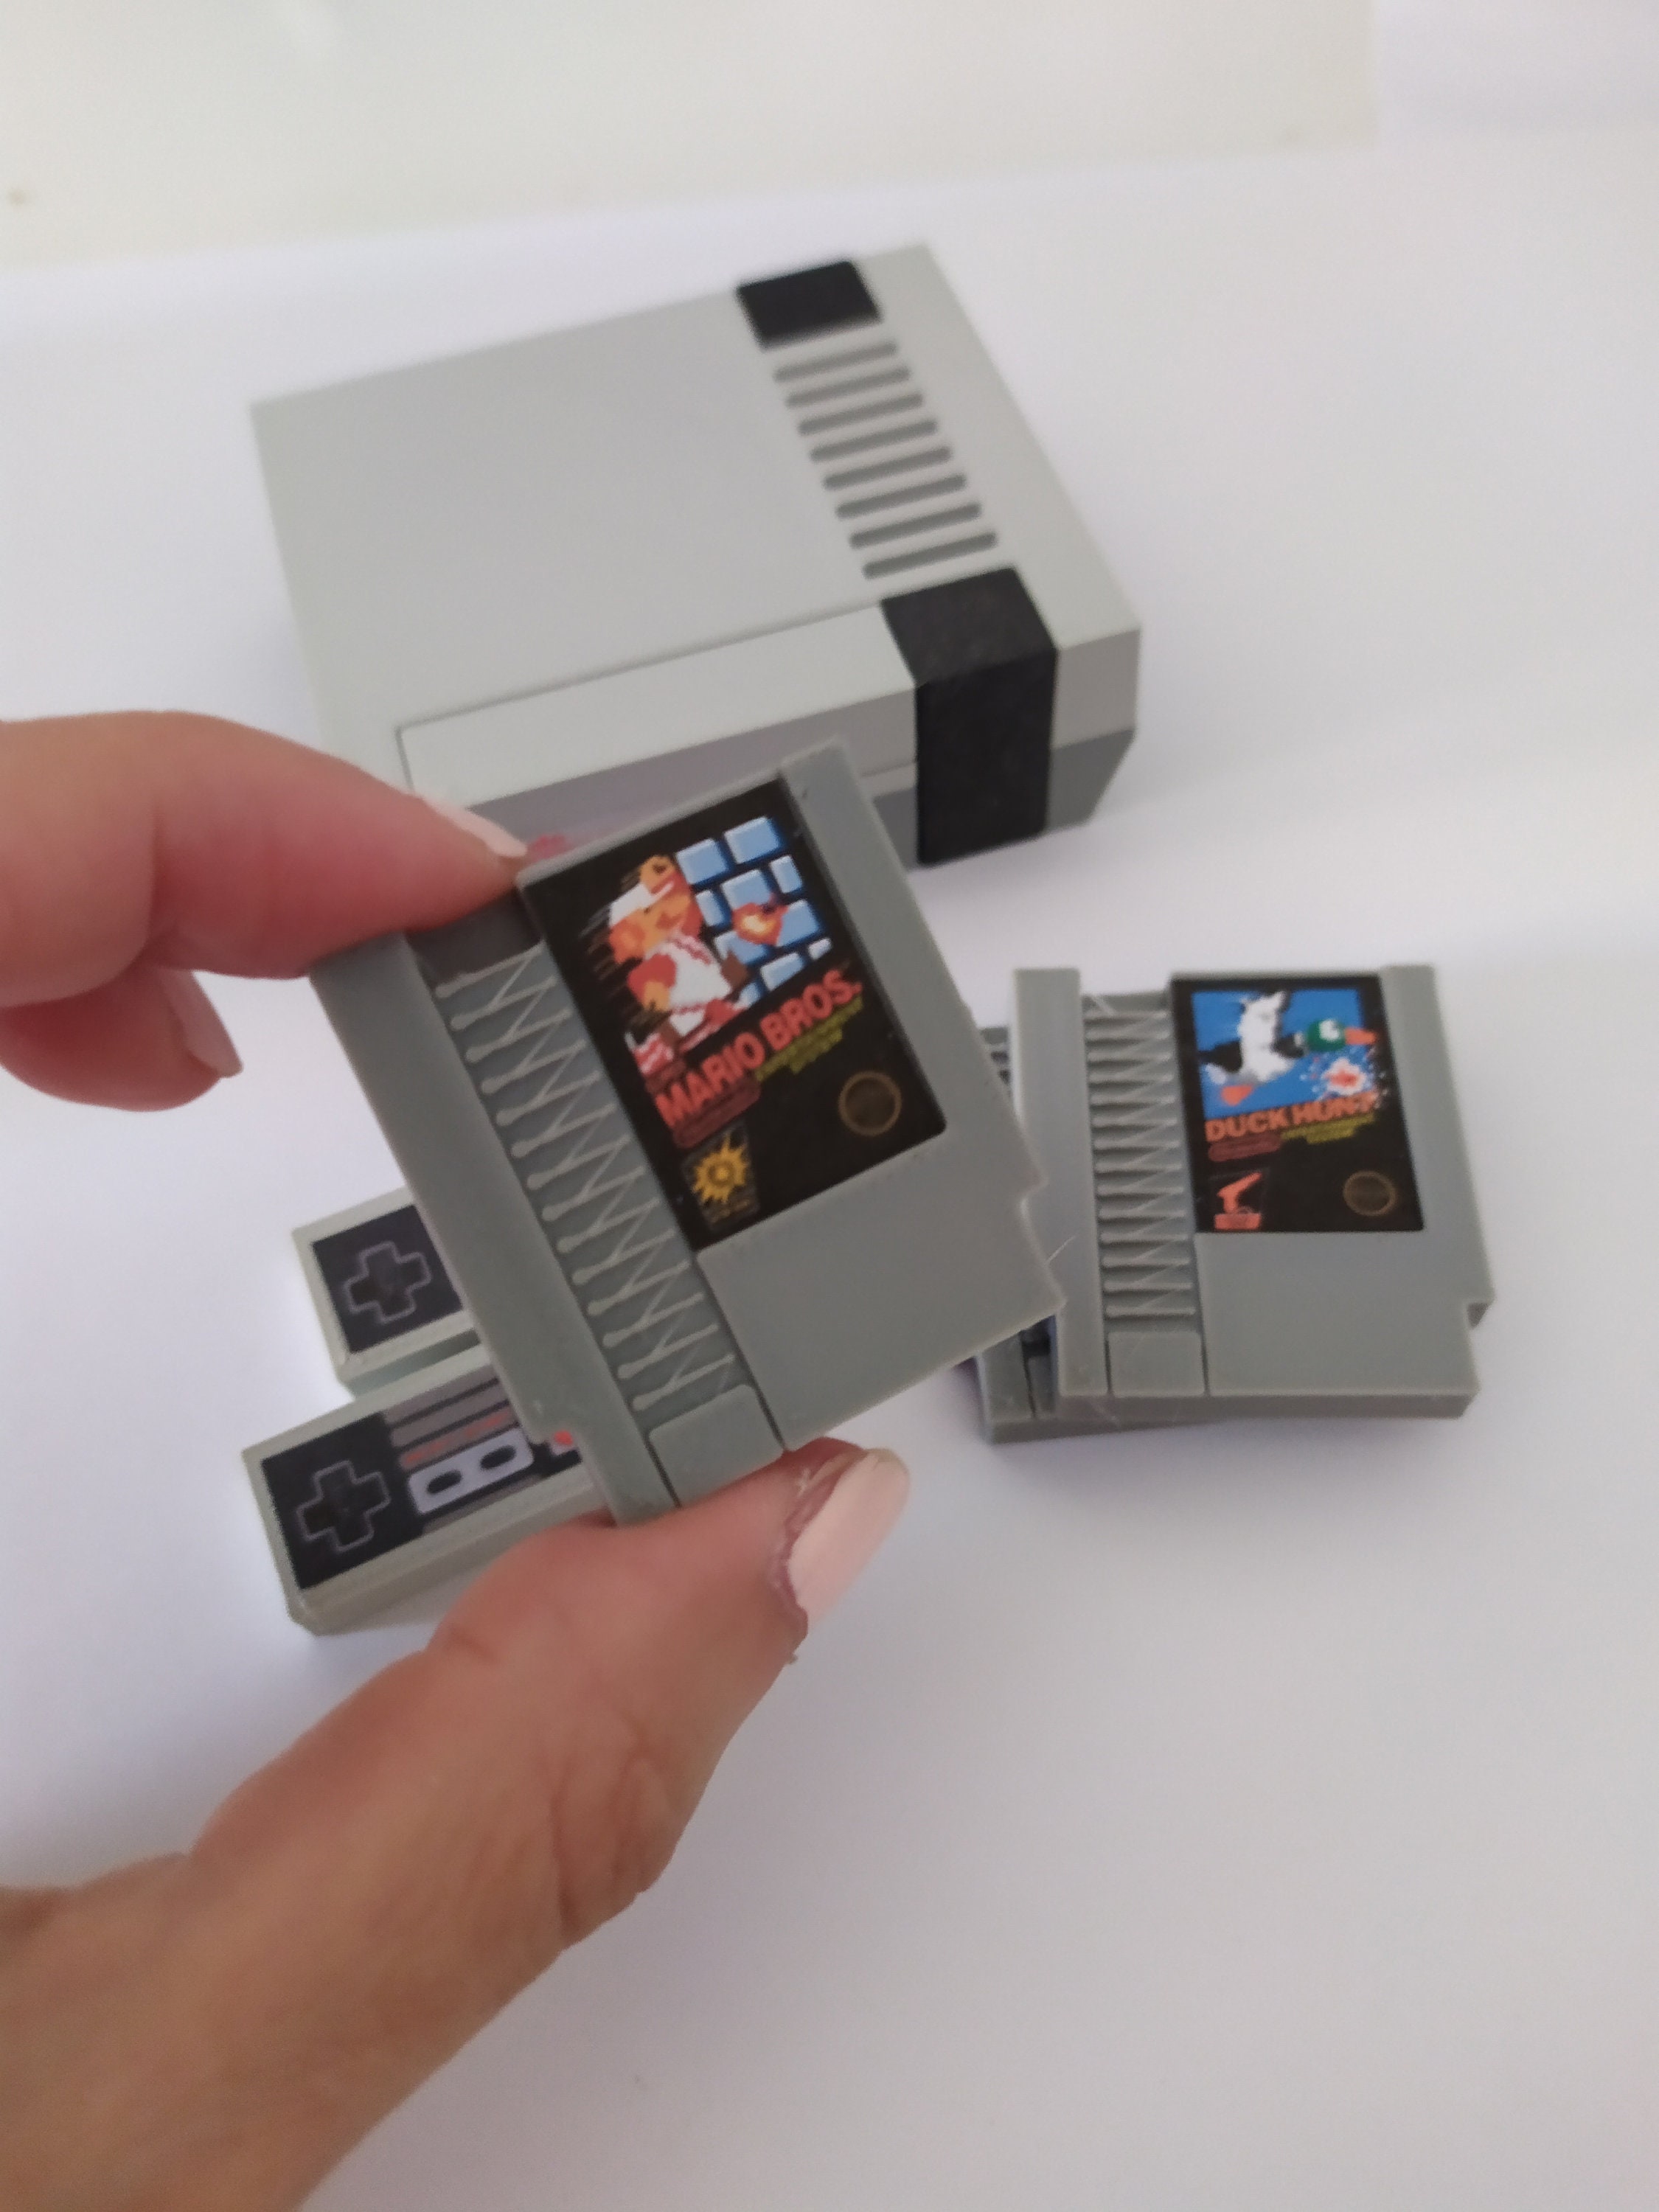 Mini Game Tetris Mario Bross Personalizado